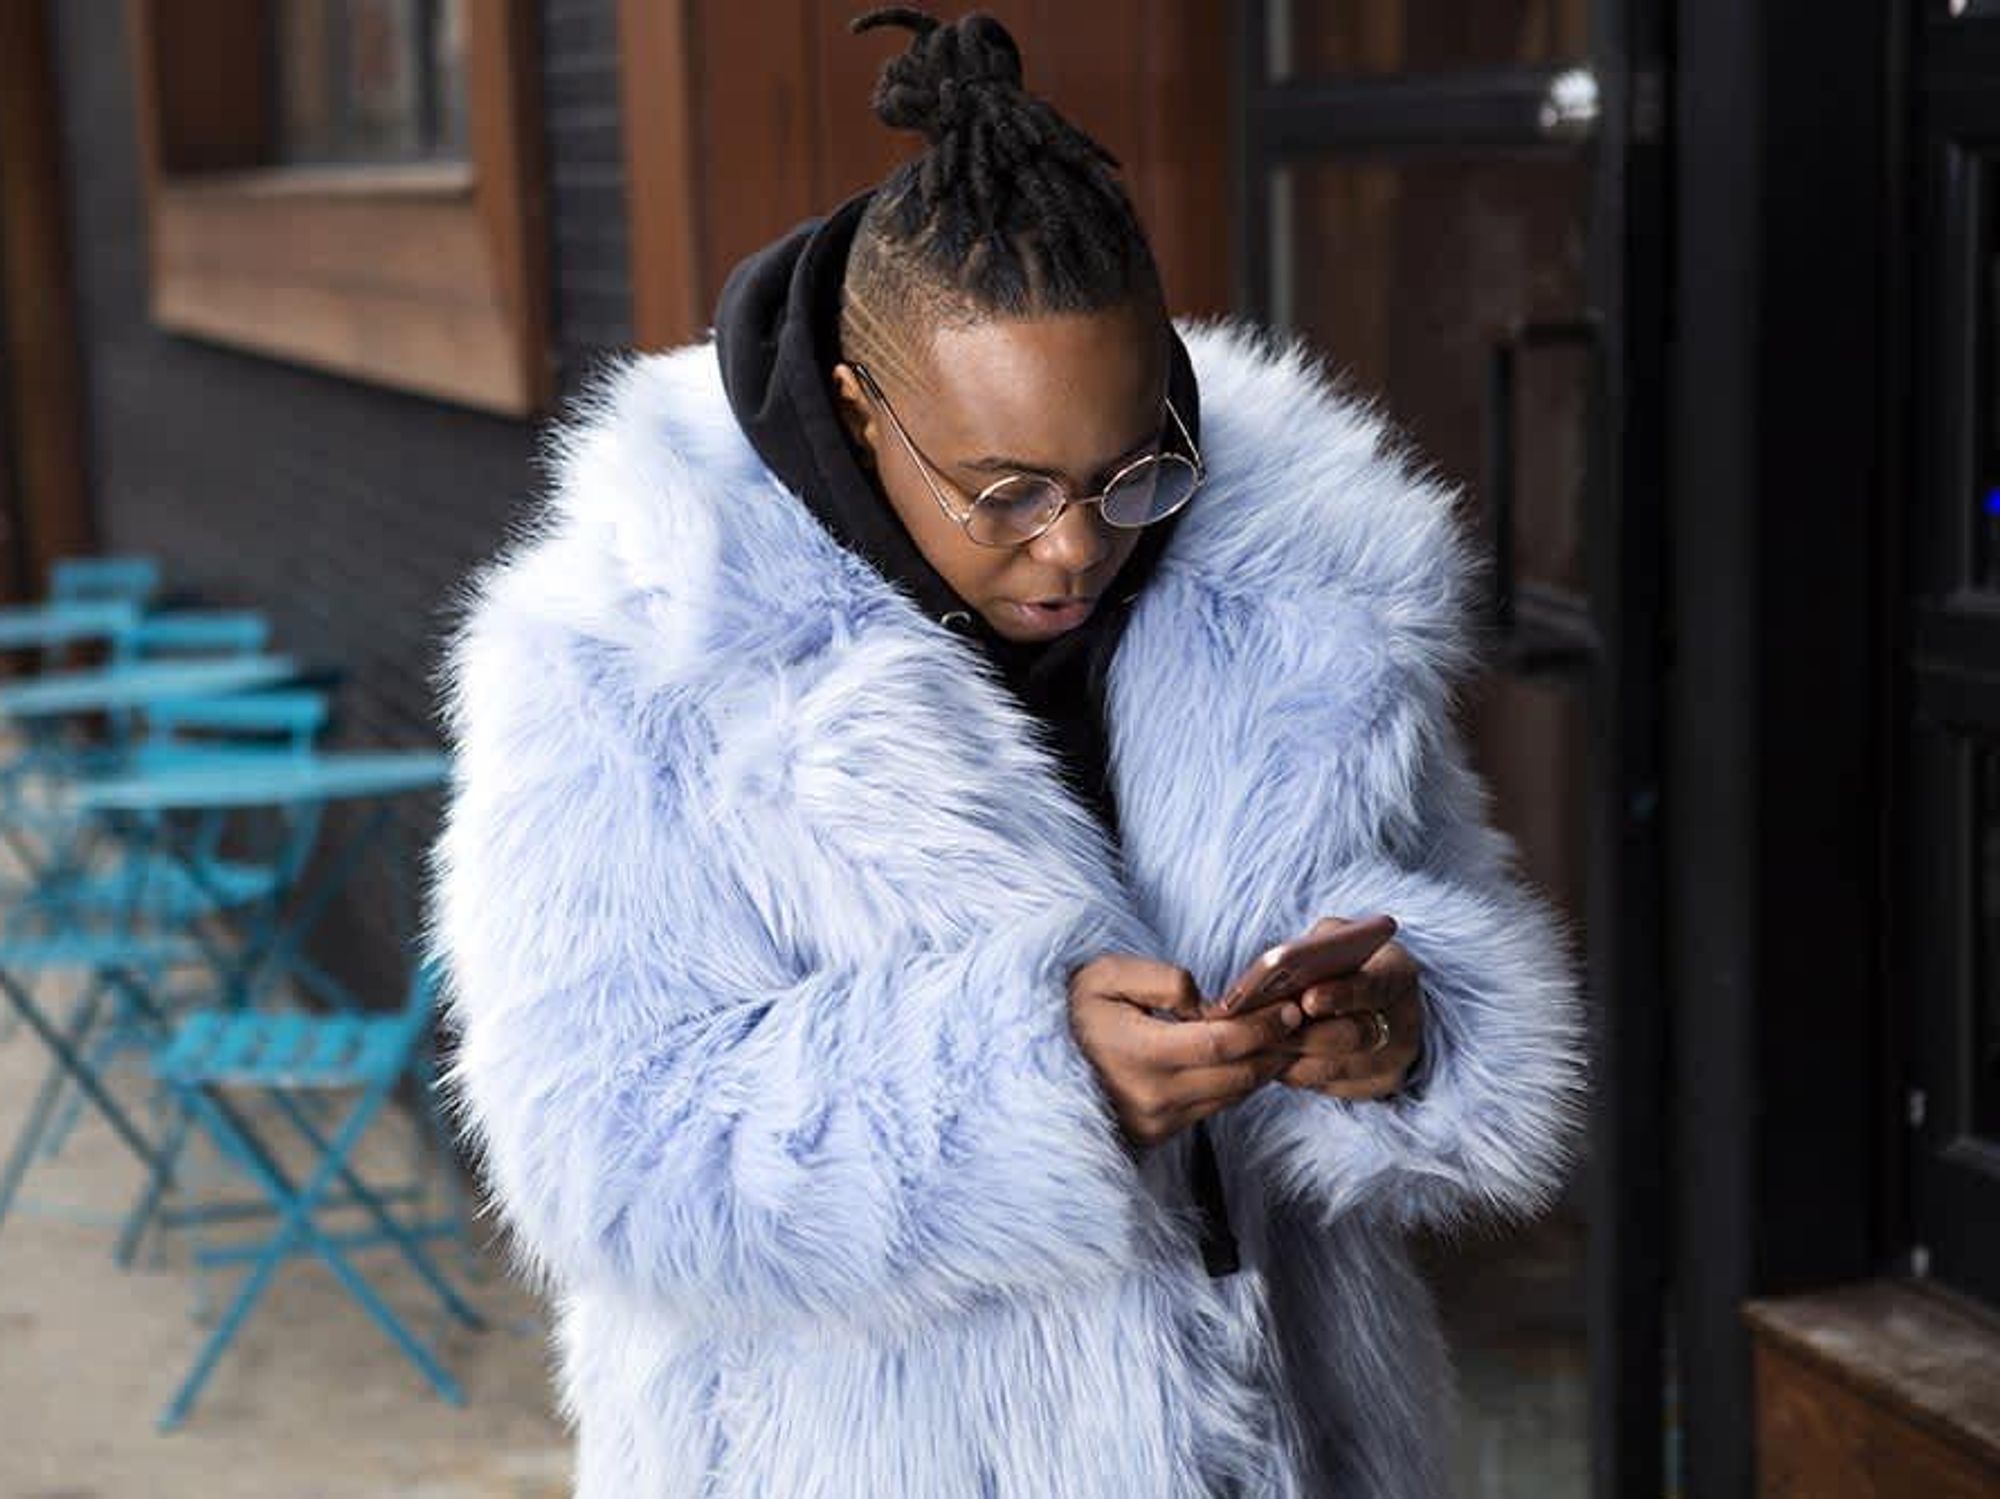 Person in fur coat looking at phone